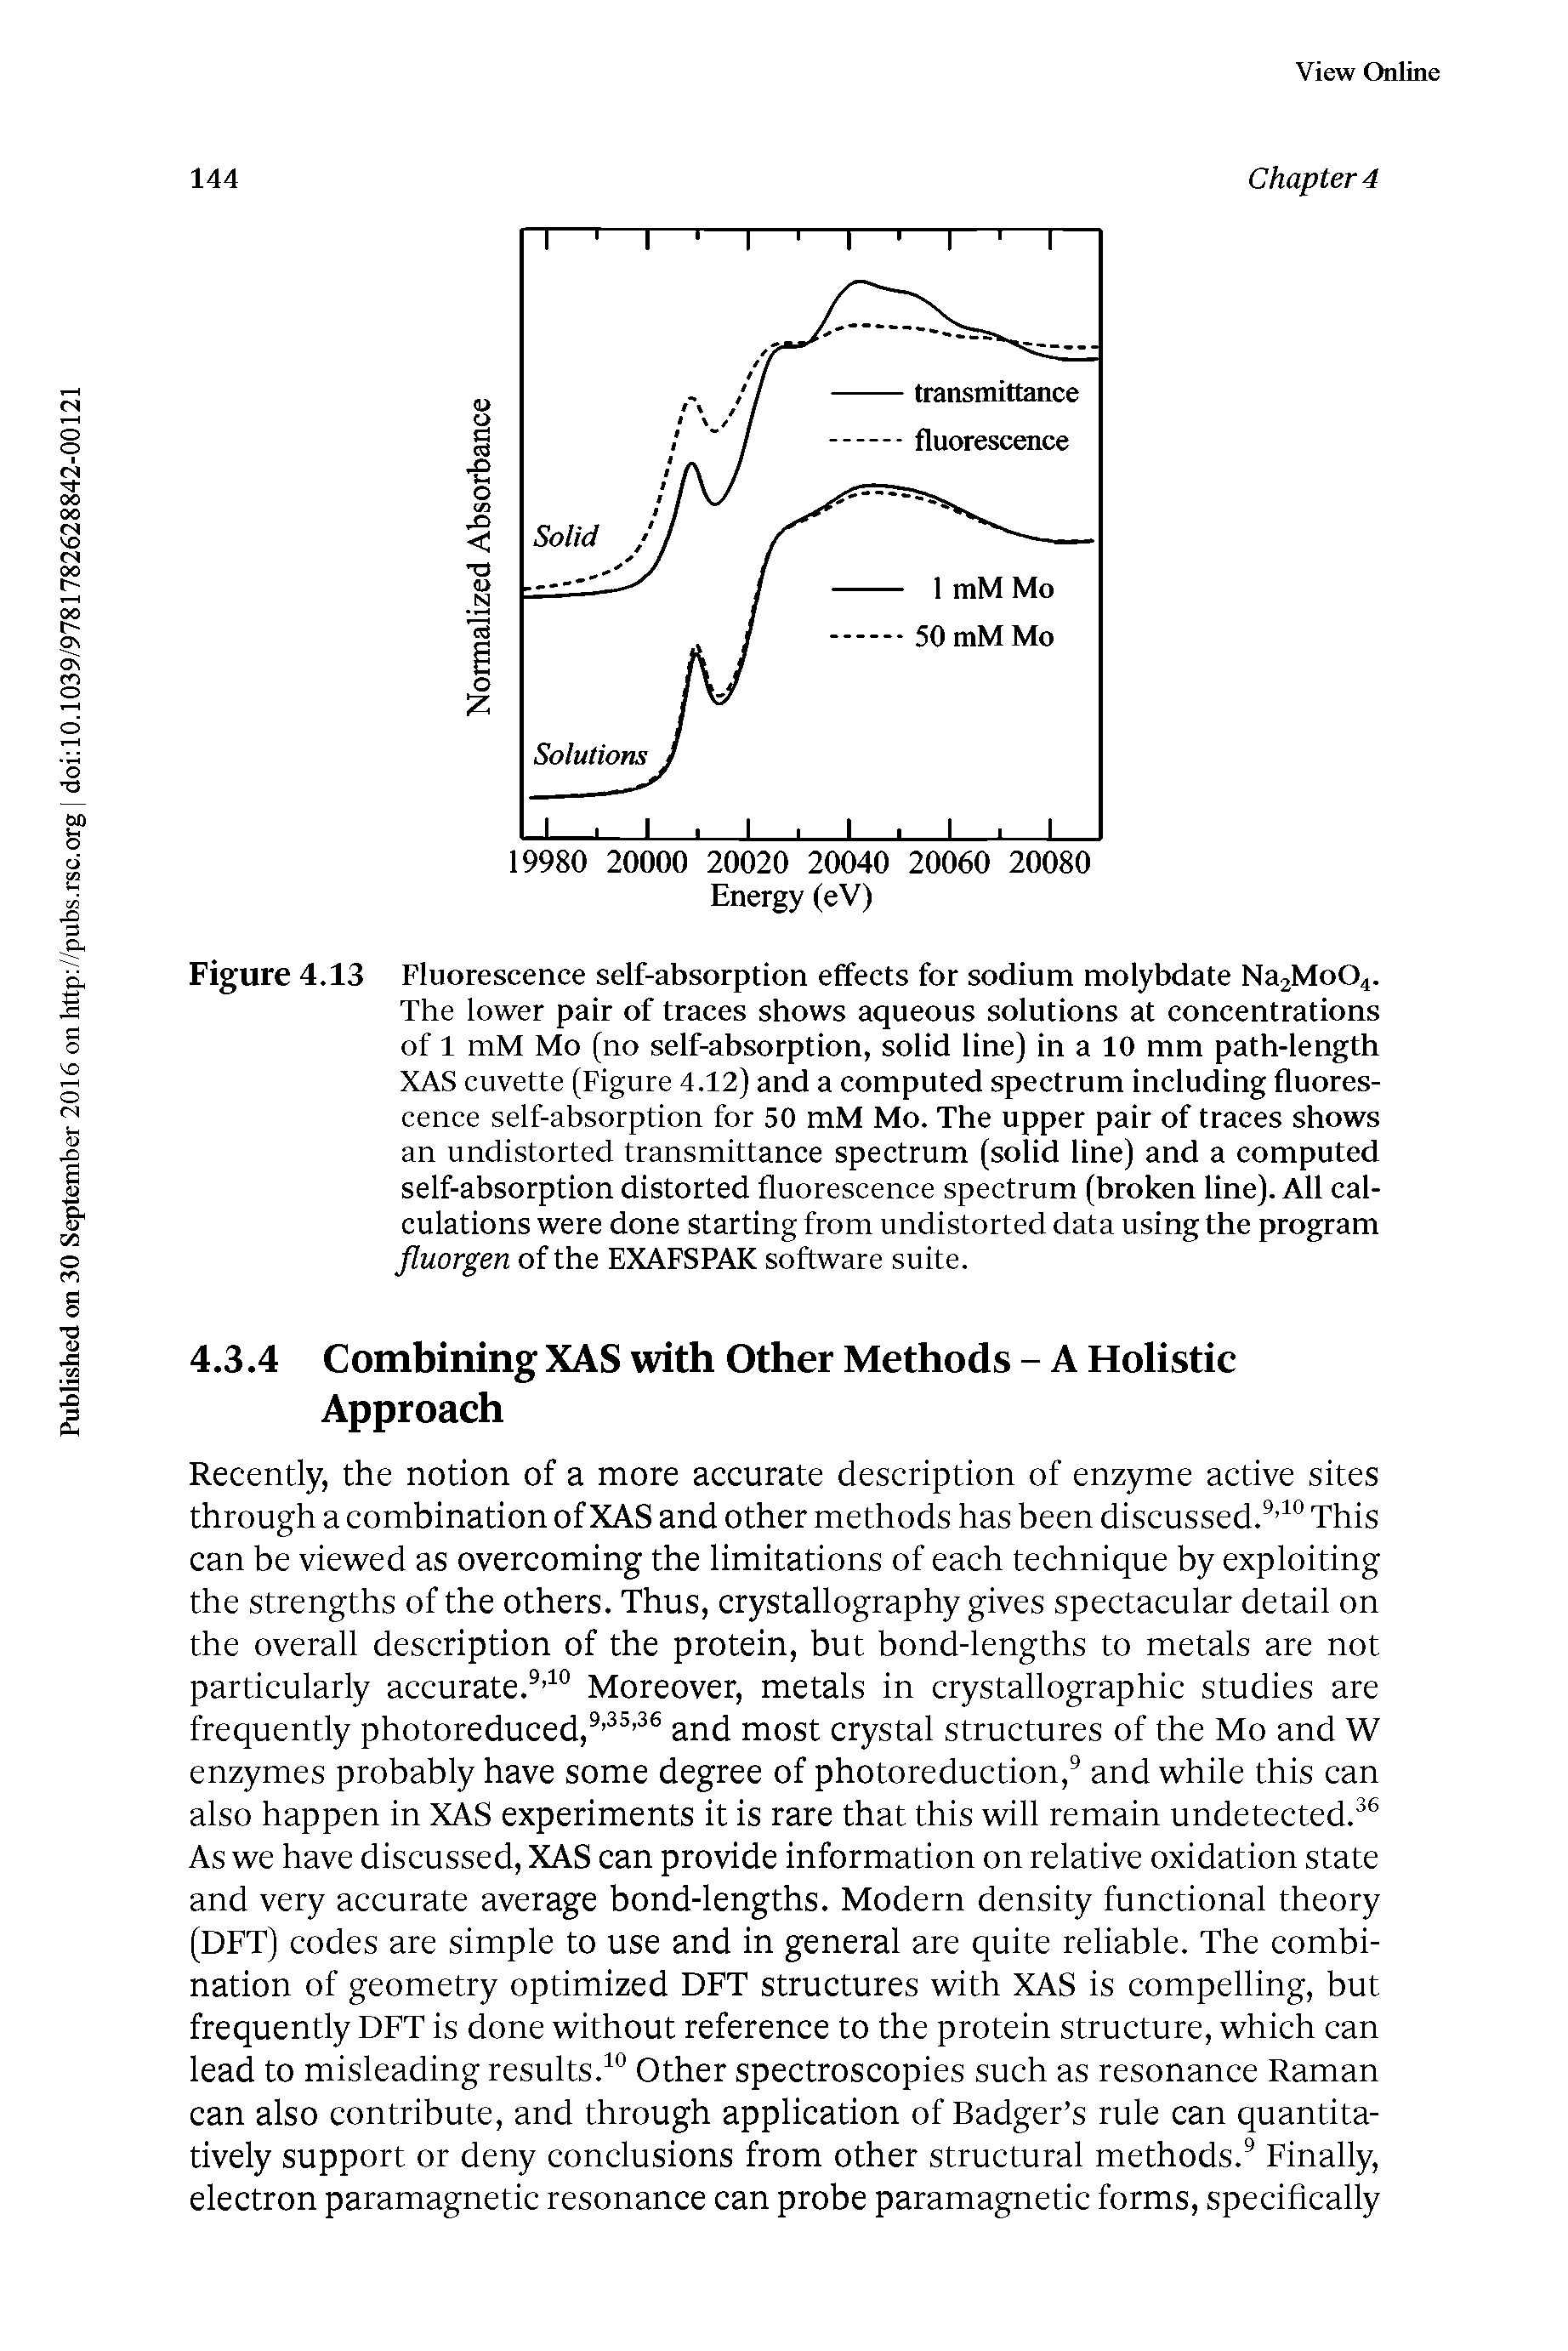 Figure 4.13 Fluorescence self-absorption effects for sodium molybdate NajMoO,.